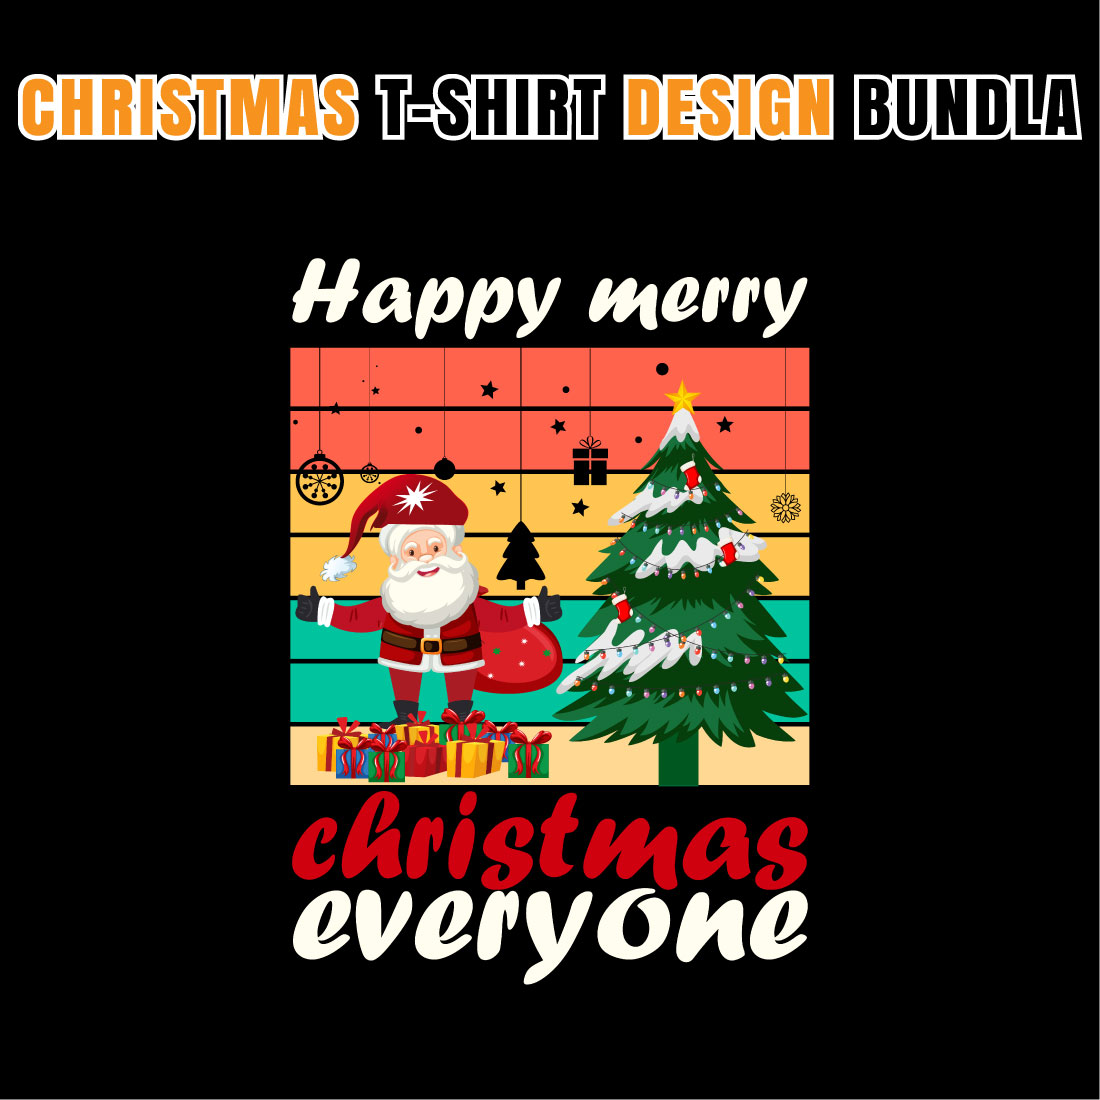 Christmas T-shirt Designs Bundle V.1 cover image.